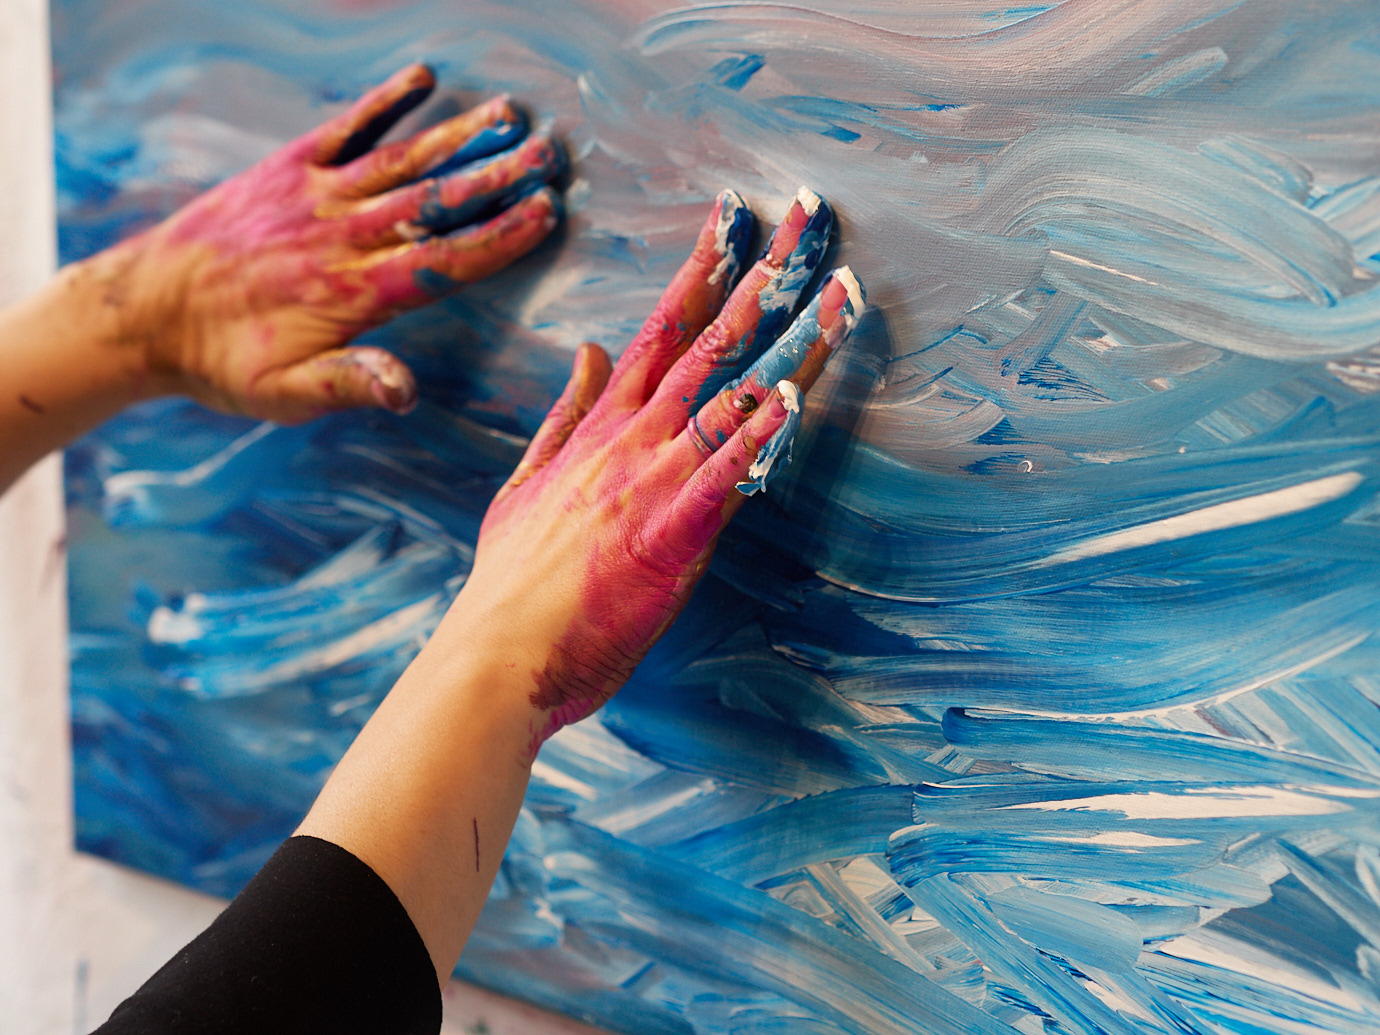 Moving paint on canvas (photo: Hendrik Roggemann)